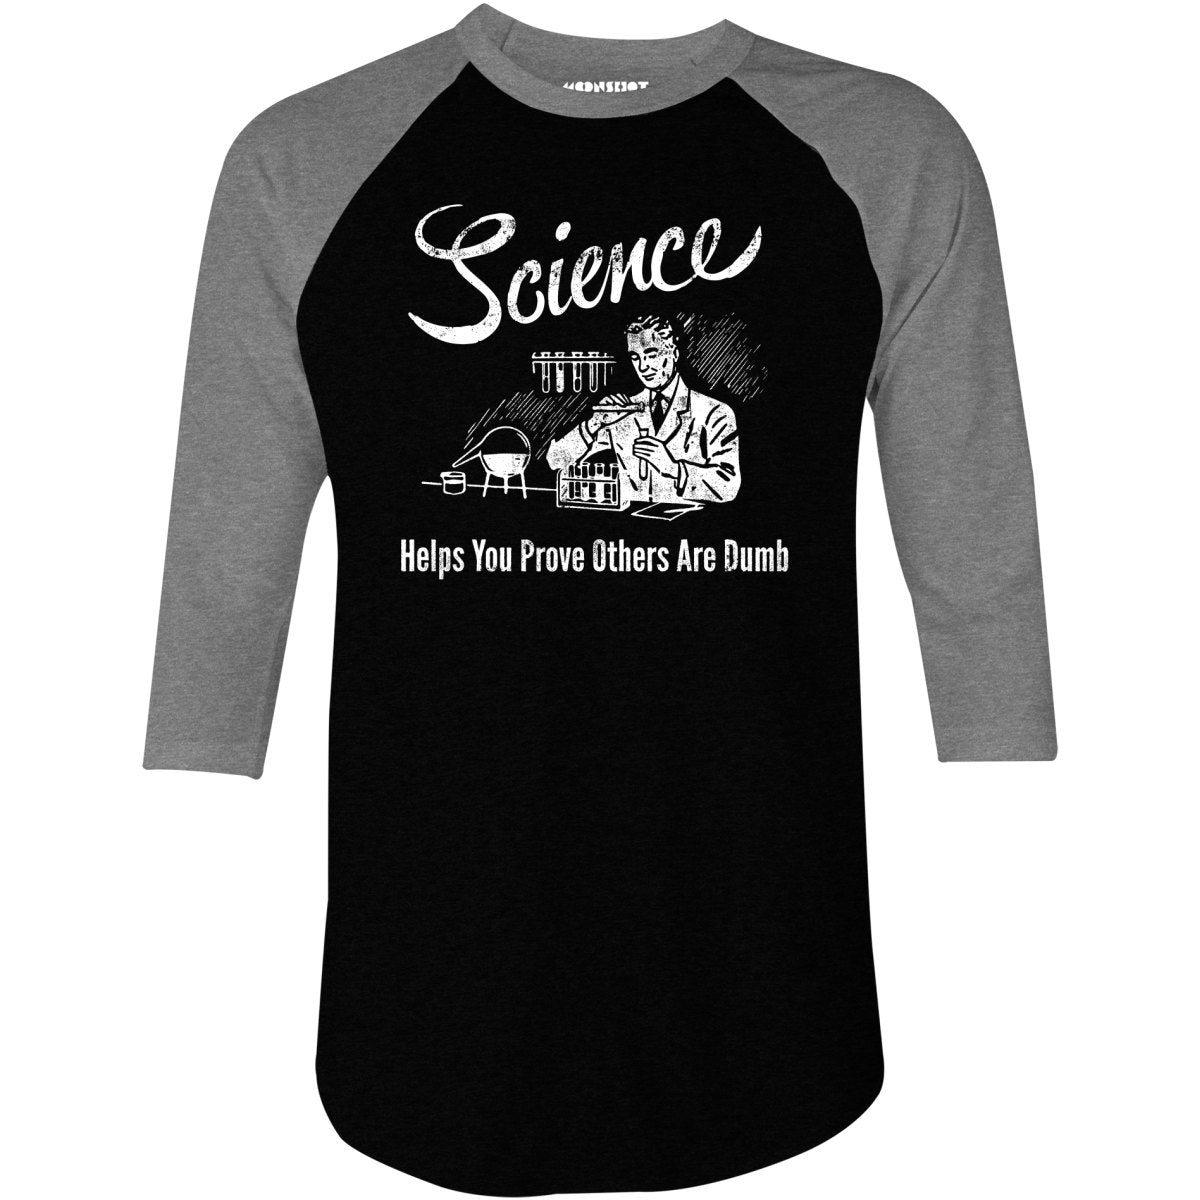 Science - 3/4 Sleeve Raglan T-Shirt